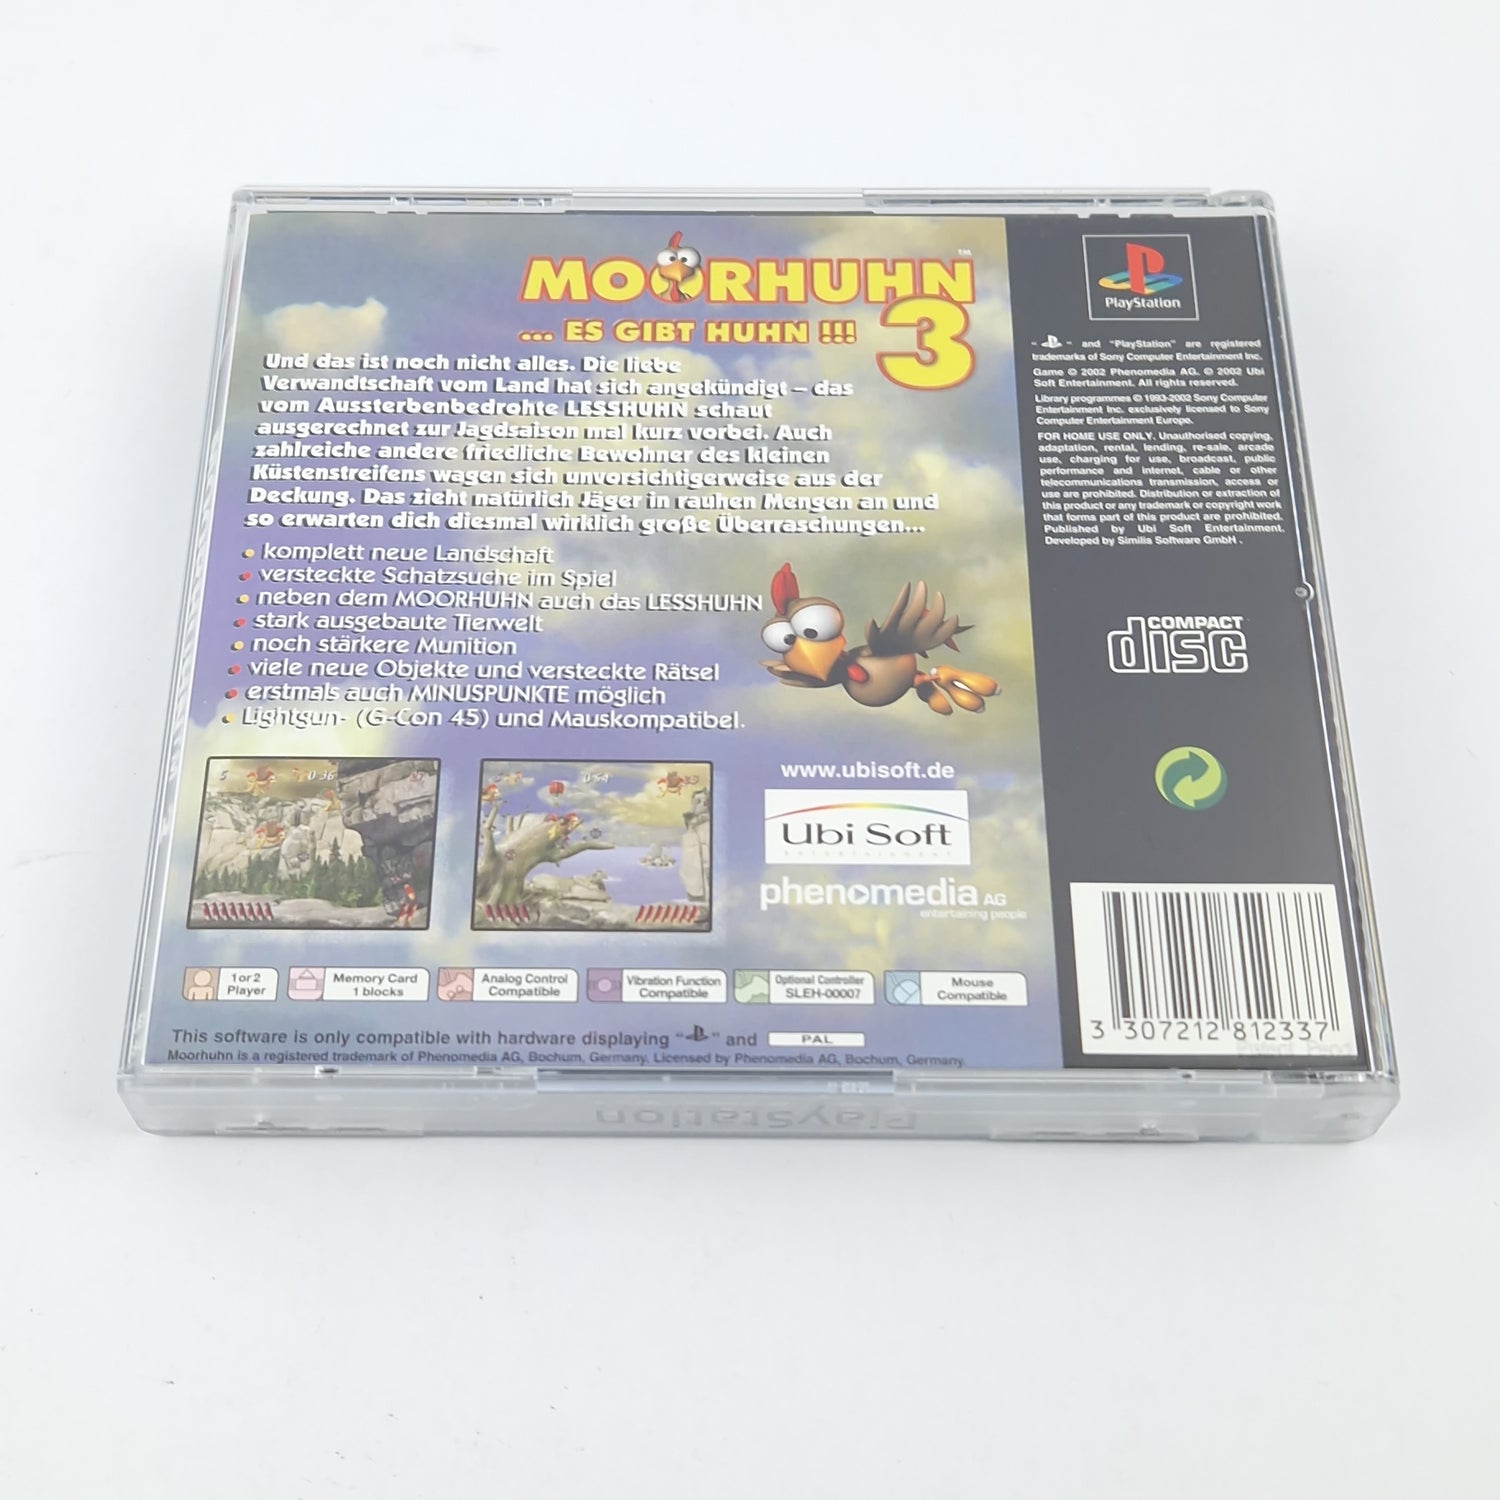 Playstation 1 Spiel : Moorhuhn 3 - OVP Anleitung CD / SONY PS1 PSX PAL